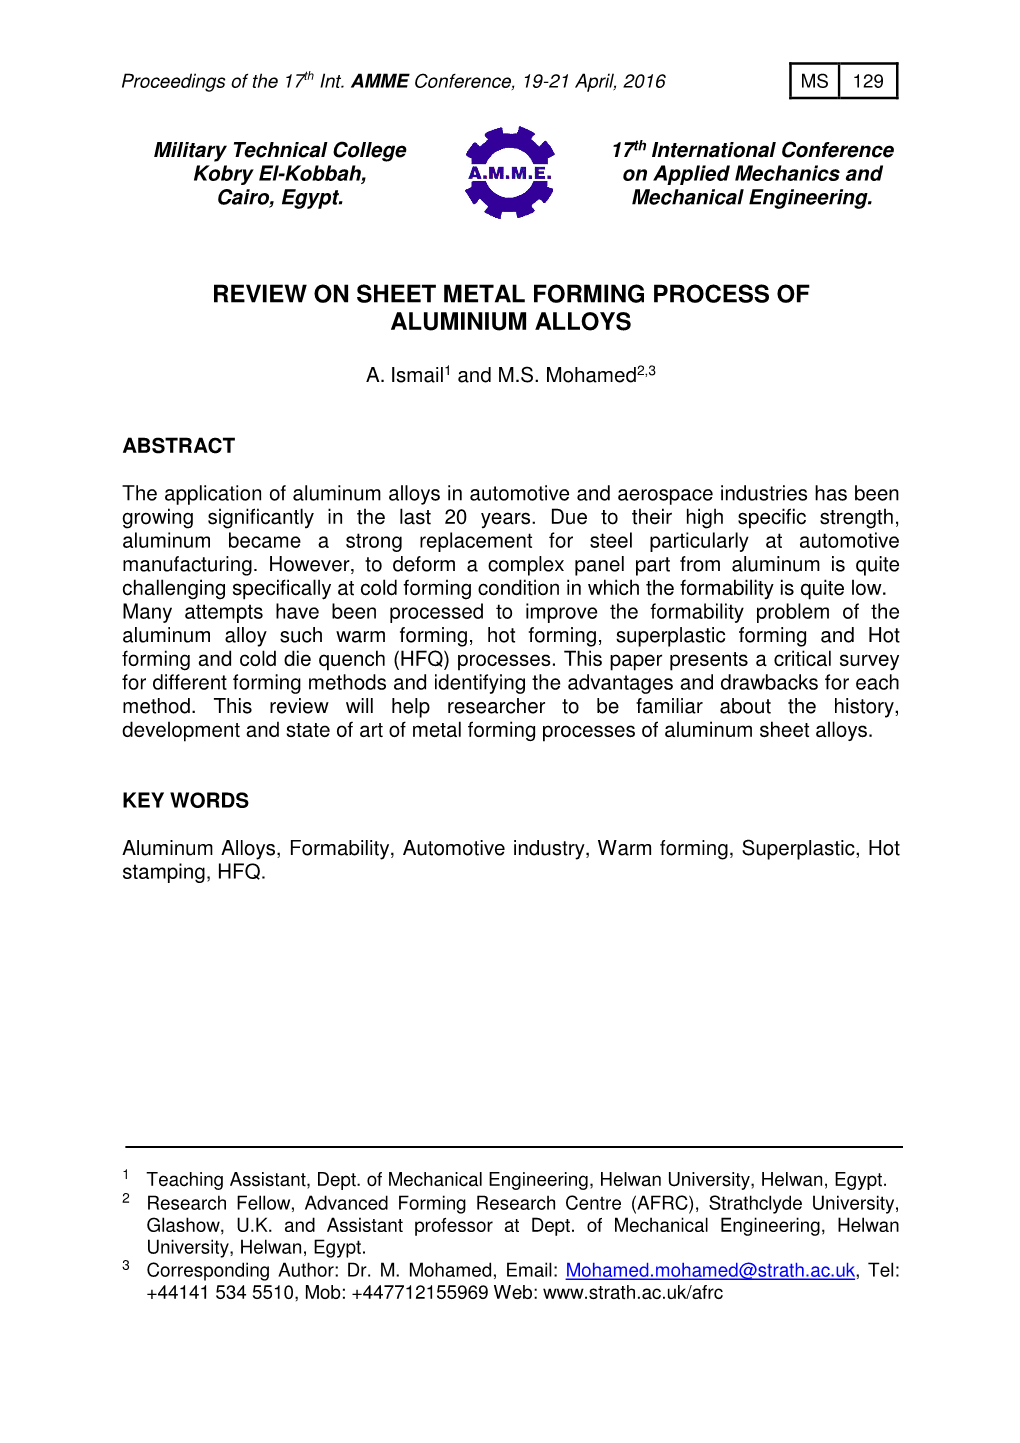 Review on Sheet Metal Forming Process of Aluminium Alloys